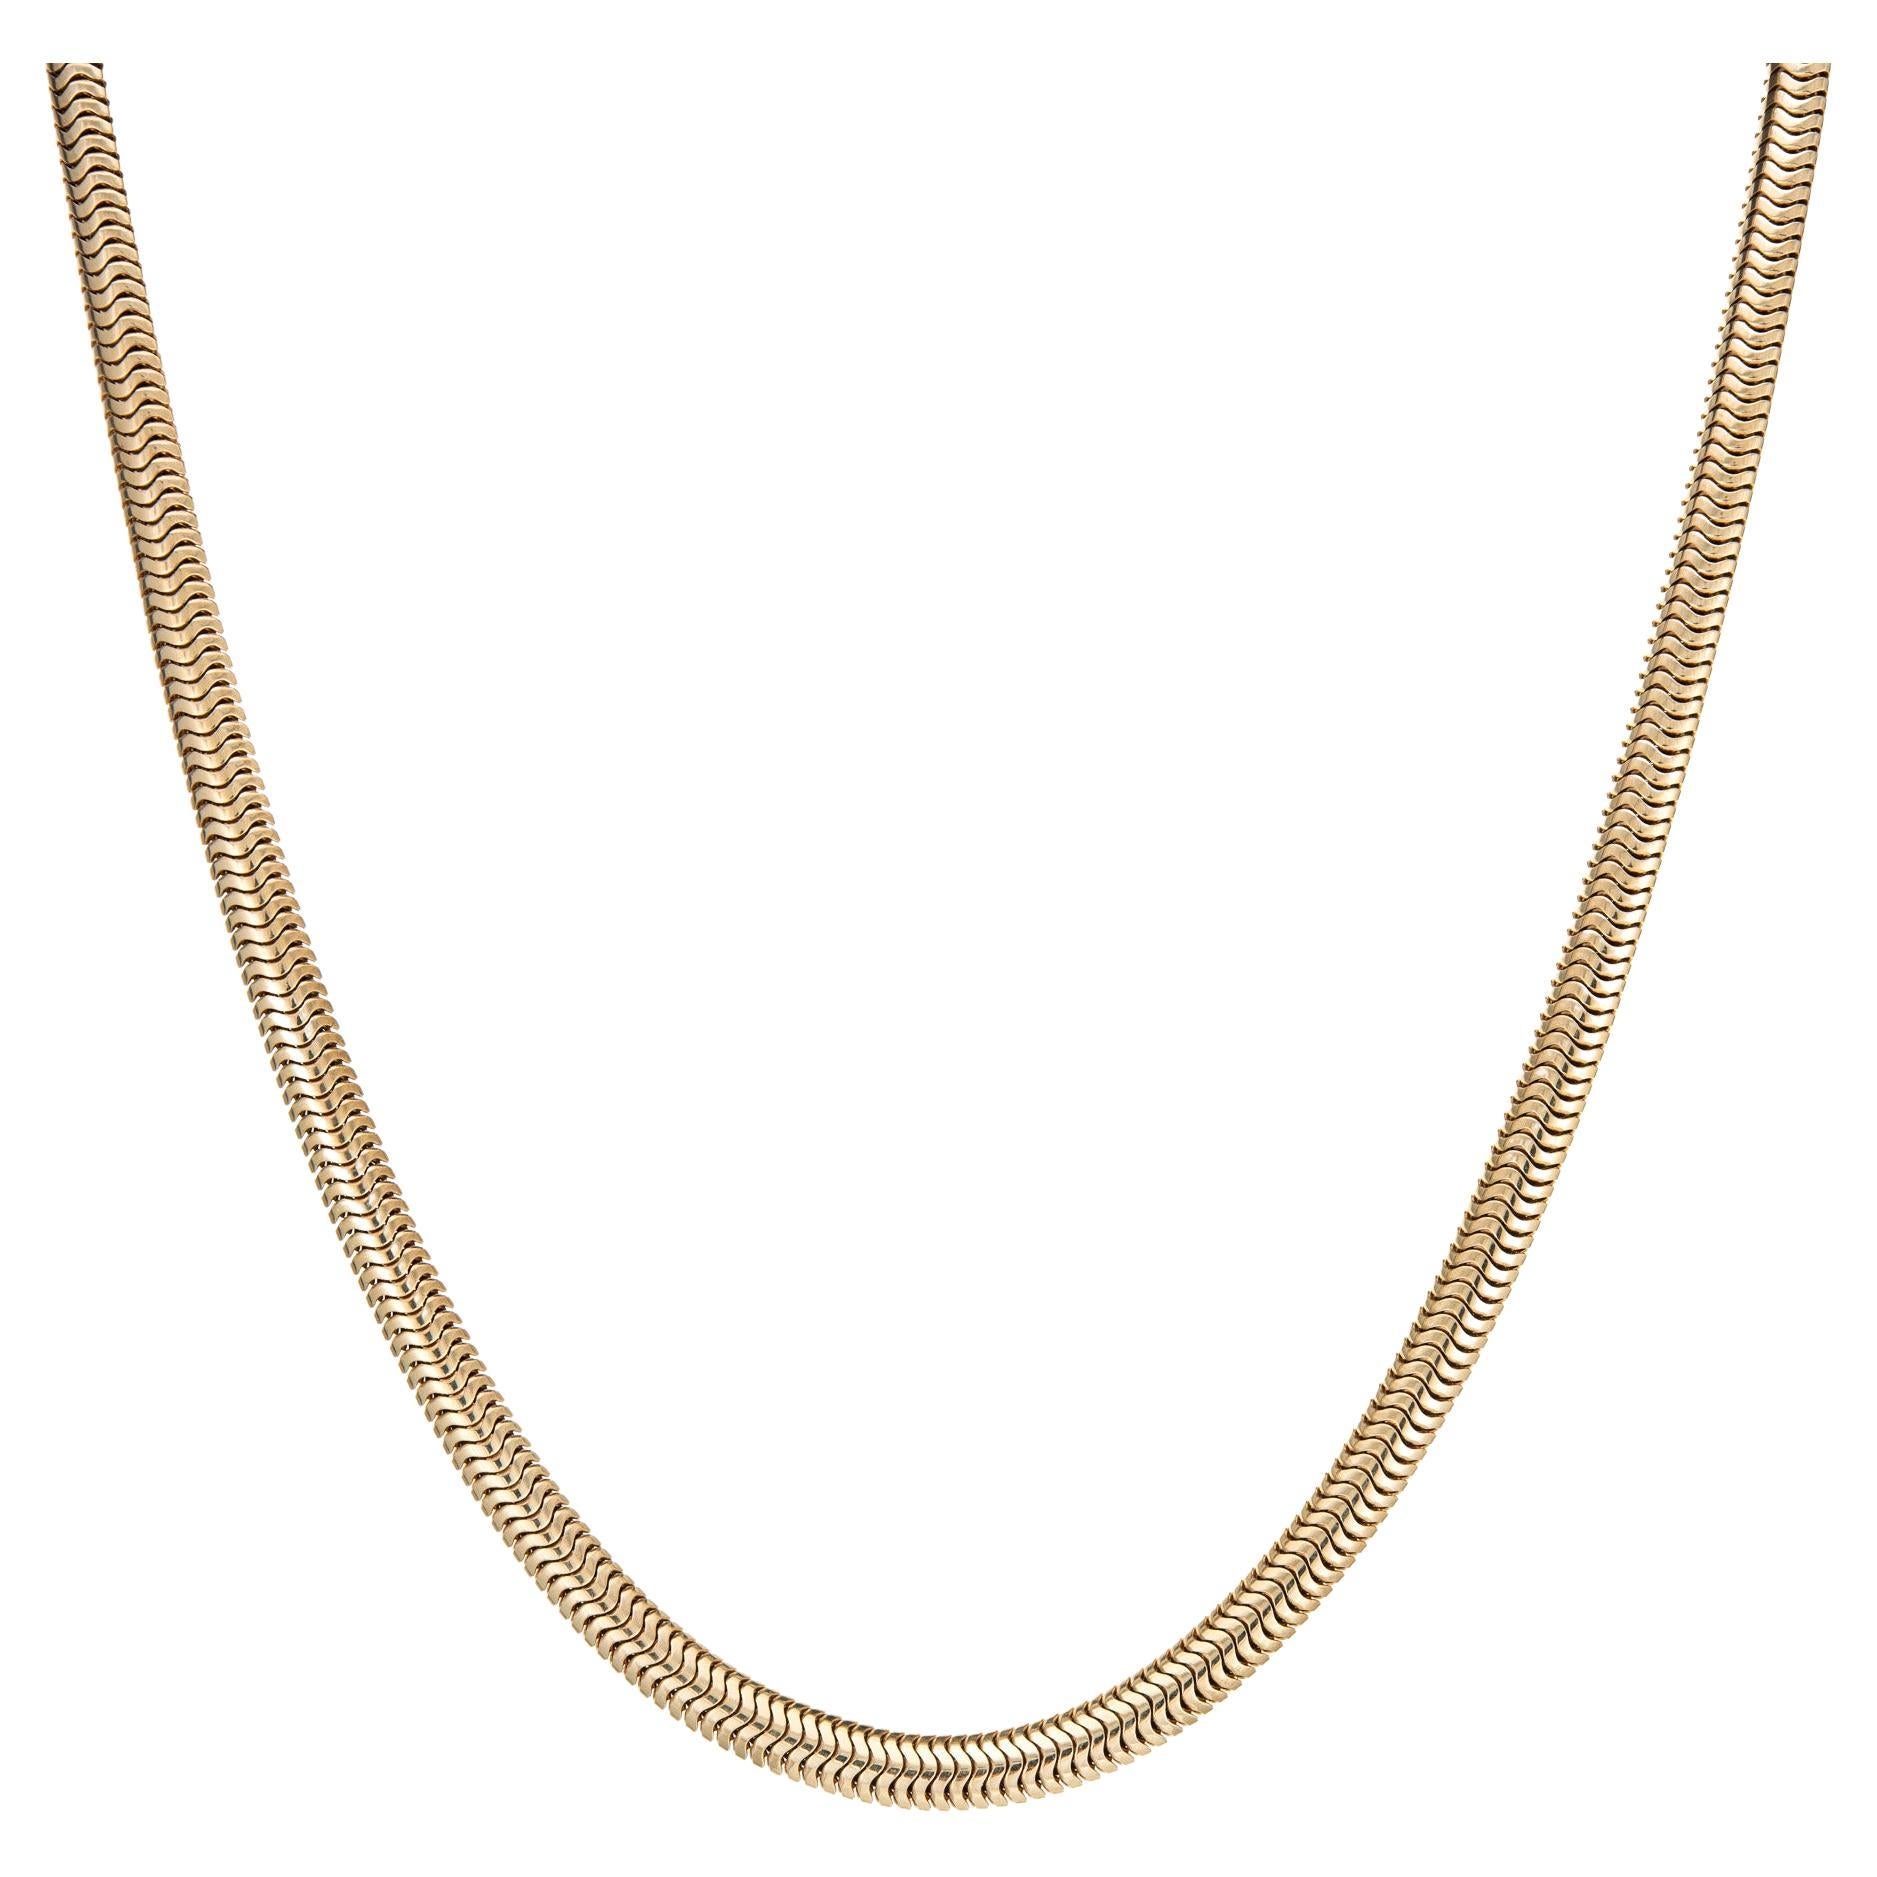 Retro Vintage Snake Necklace 10k Yellow Gold 16" Choker Length Fine Jewelry